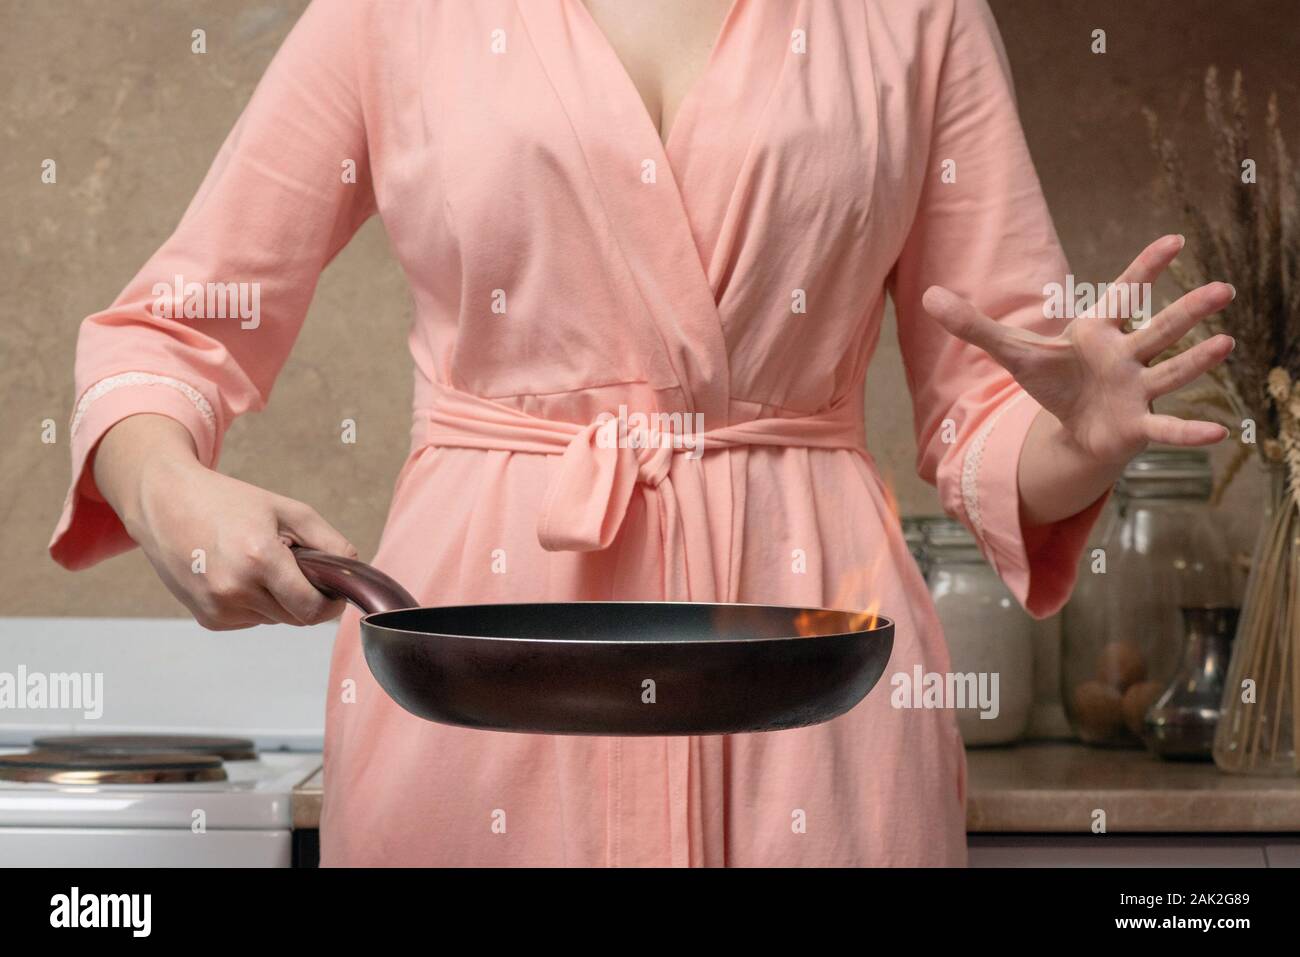 Verwirrt Frau mit Qual omelette Pfanne hautnah. Stockfoto